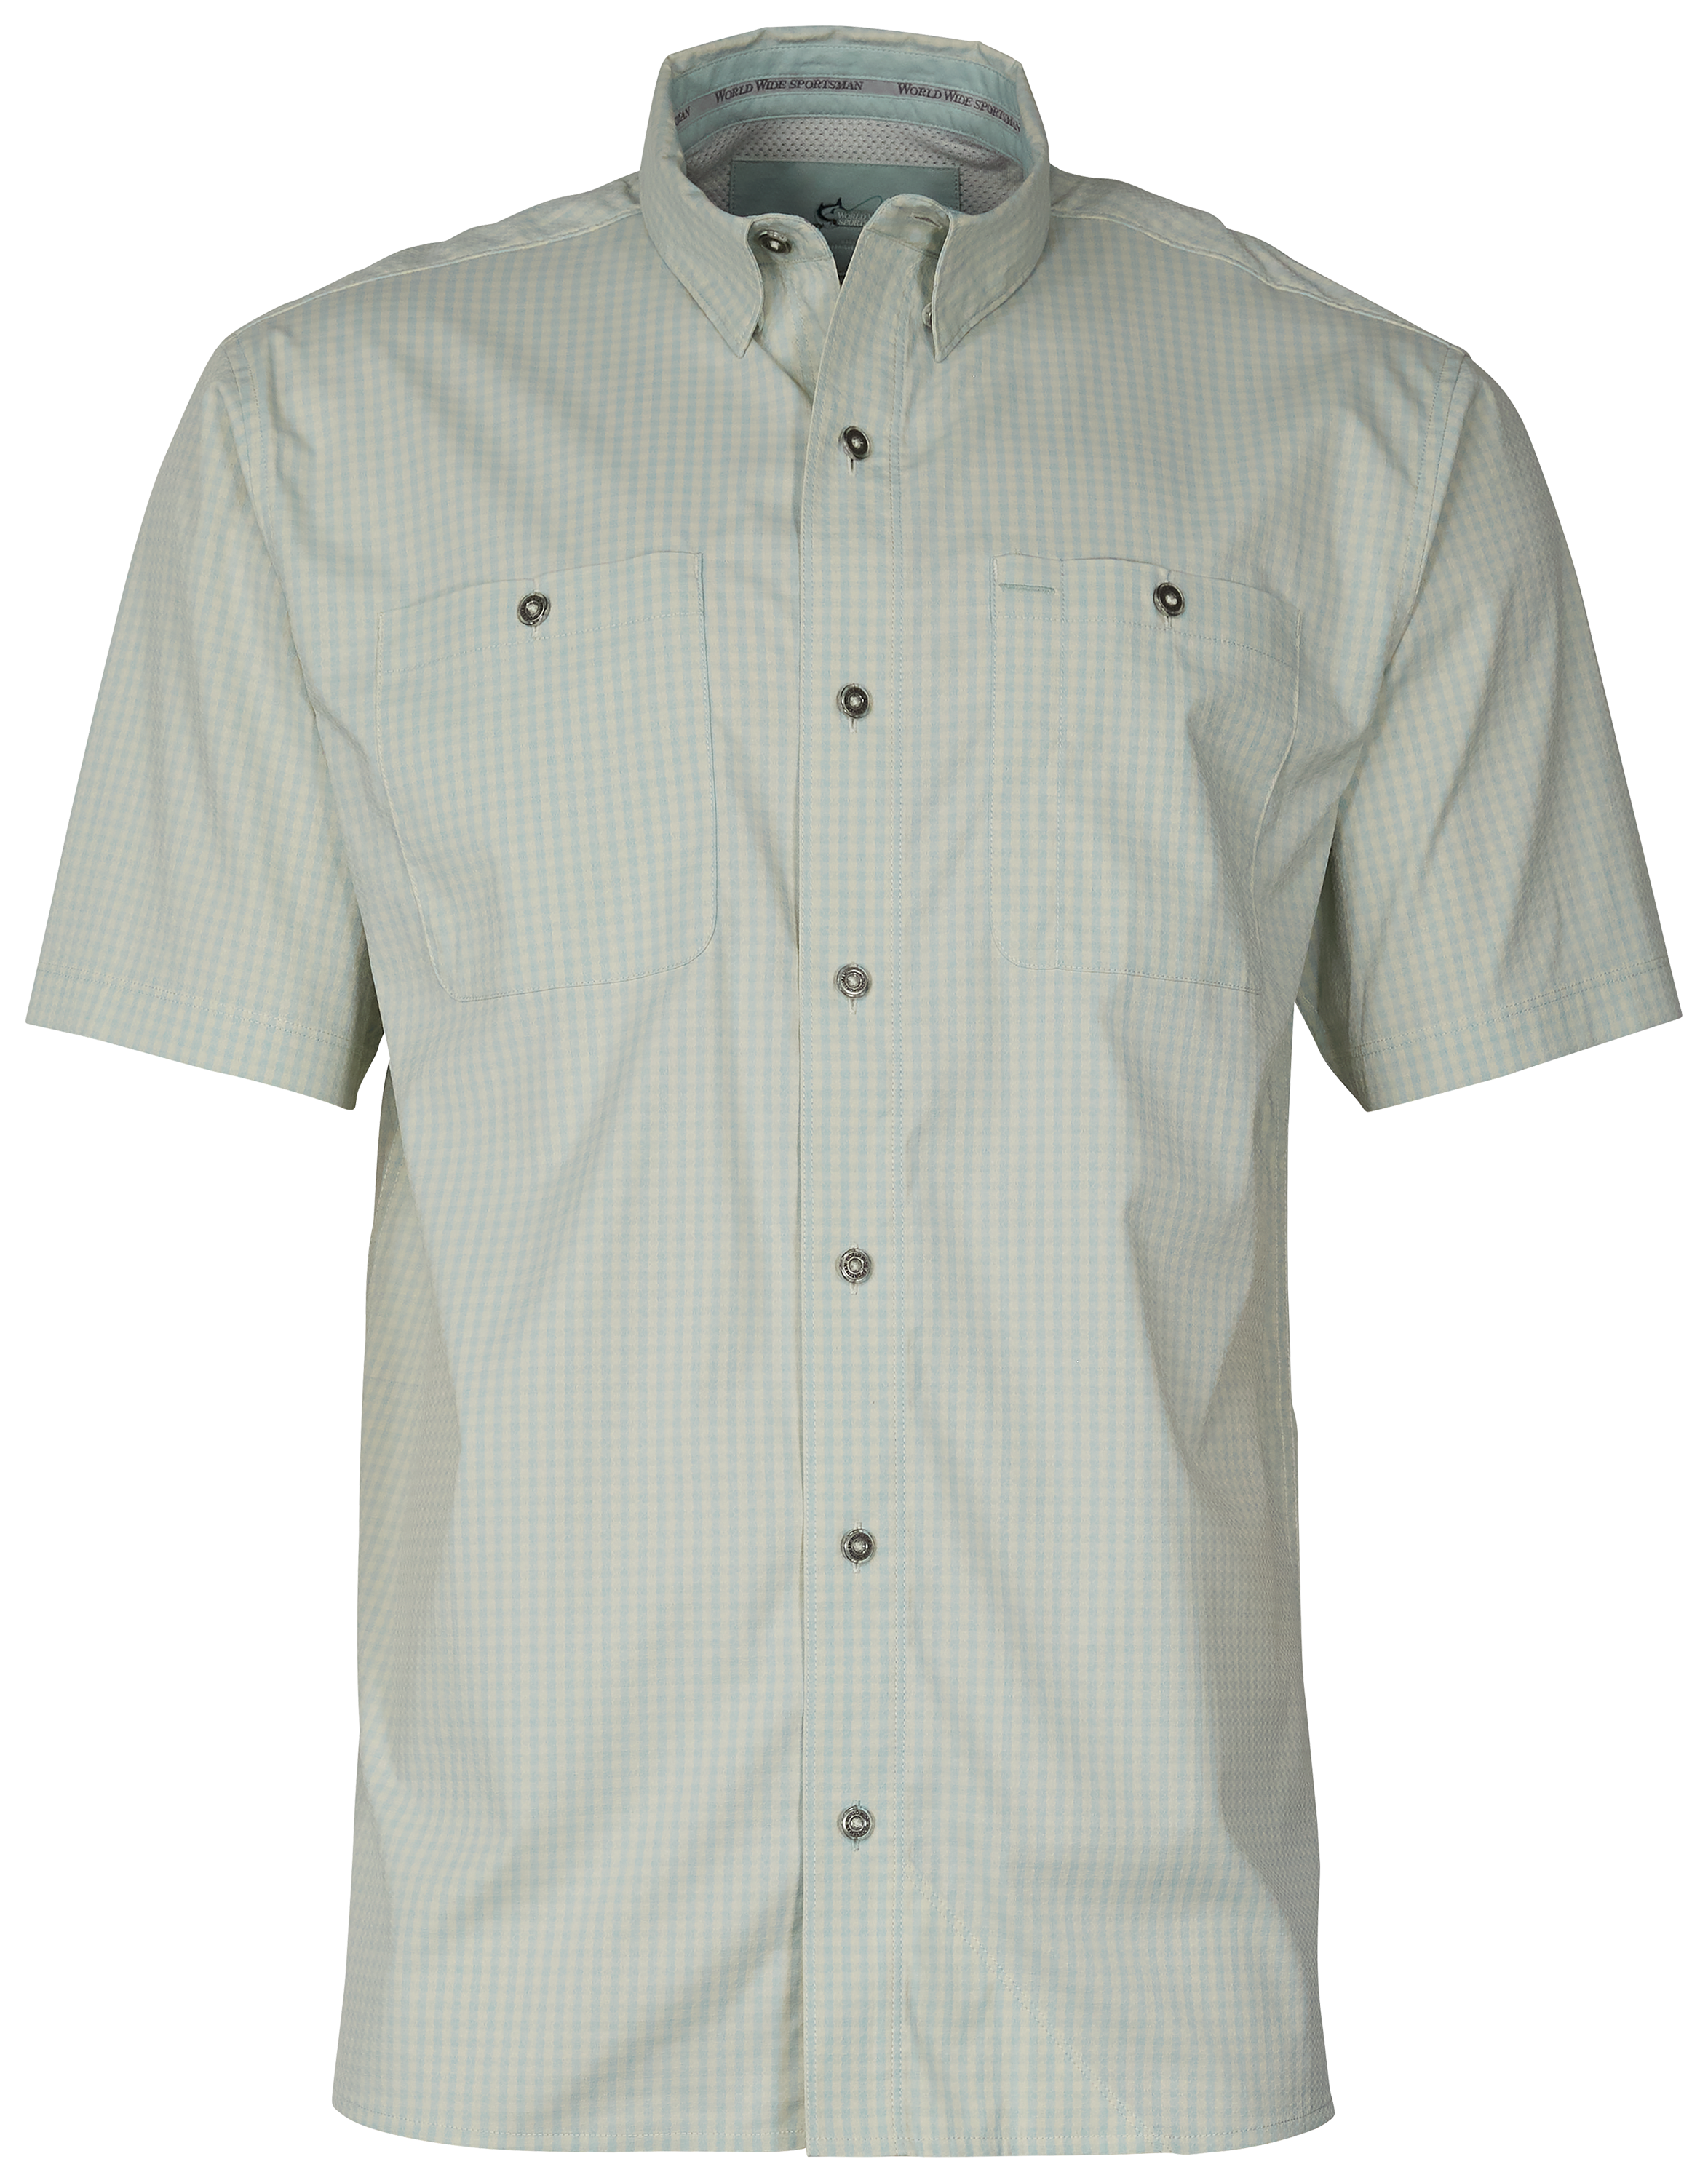 World Wide Sportsman Ultimate Angler Plaid Short-Sleeve Shirt for Men